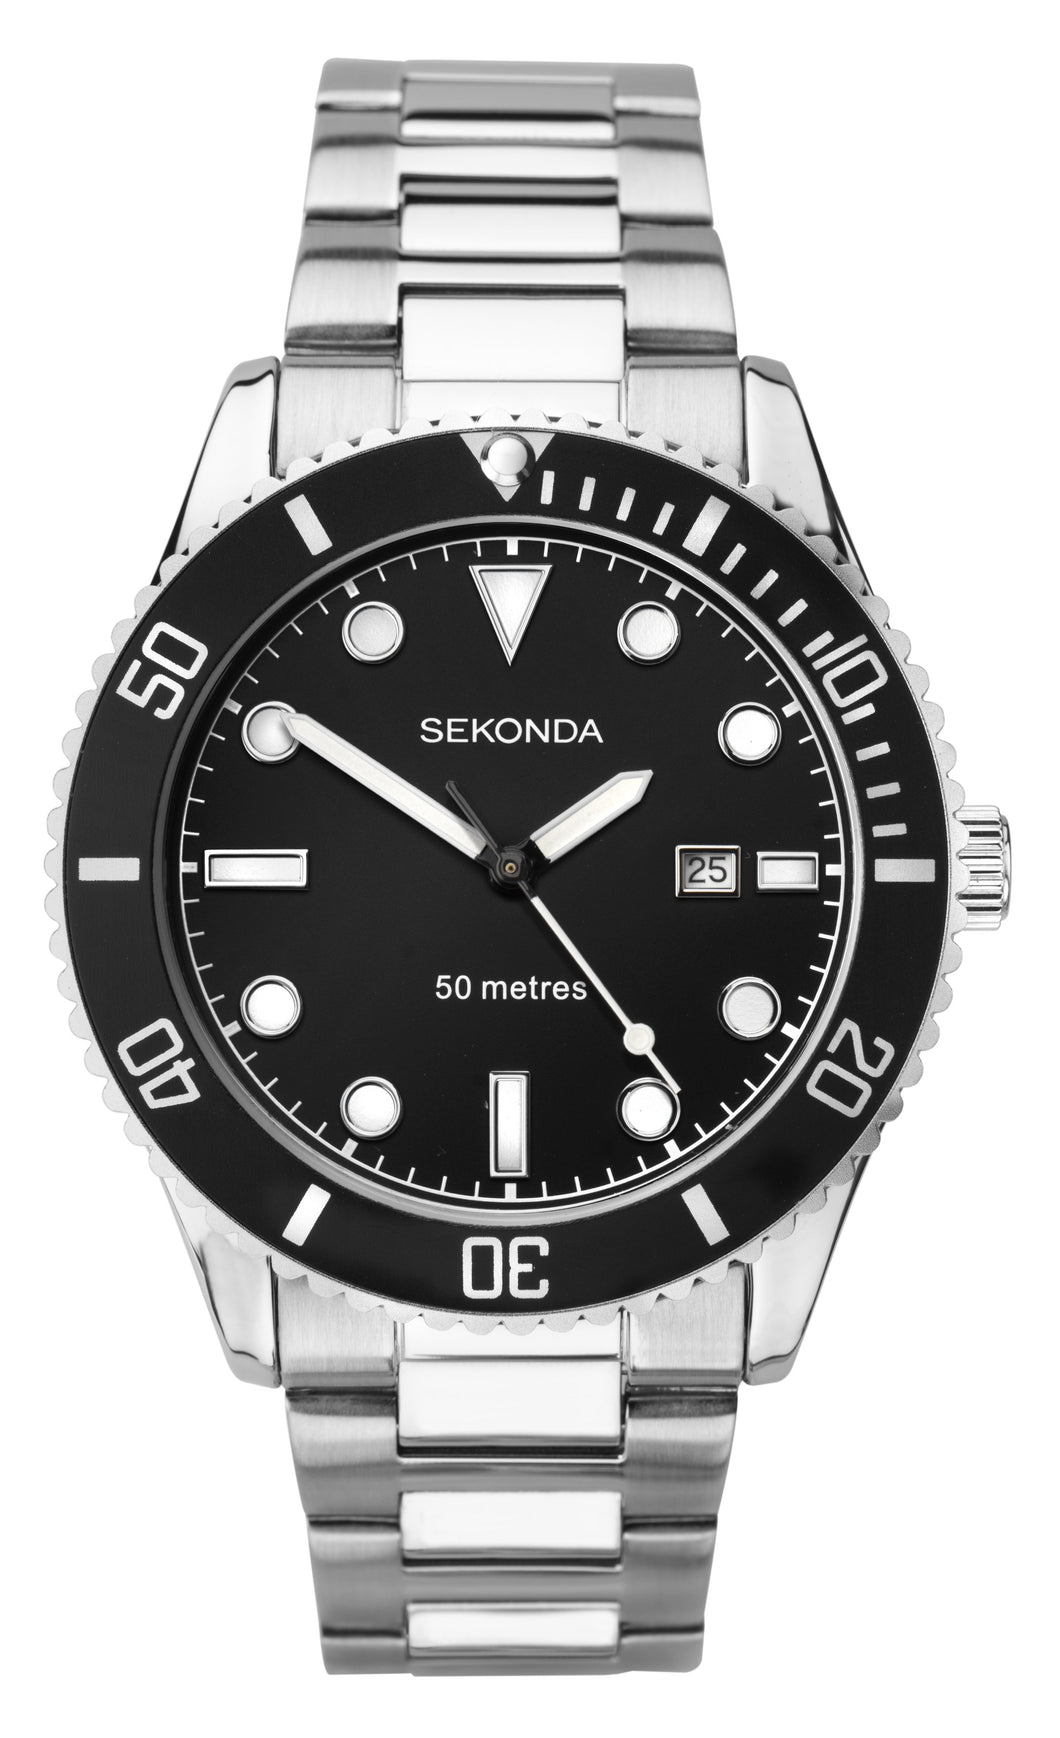 Sekonda Men’s Stainless Steel Bracelet Watch - Product Code - 1788